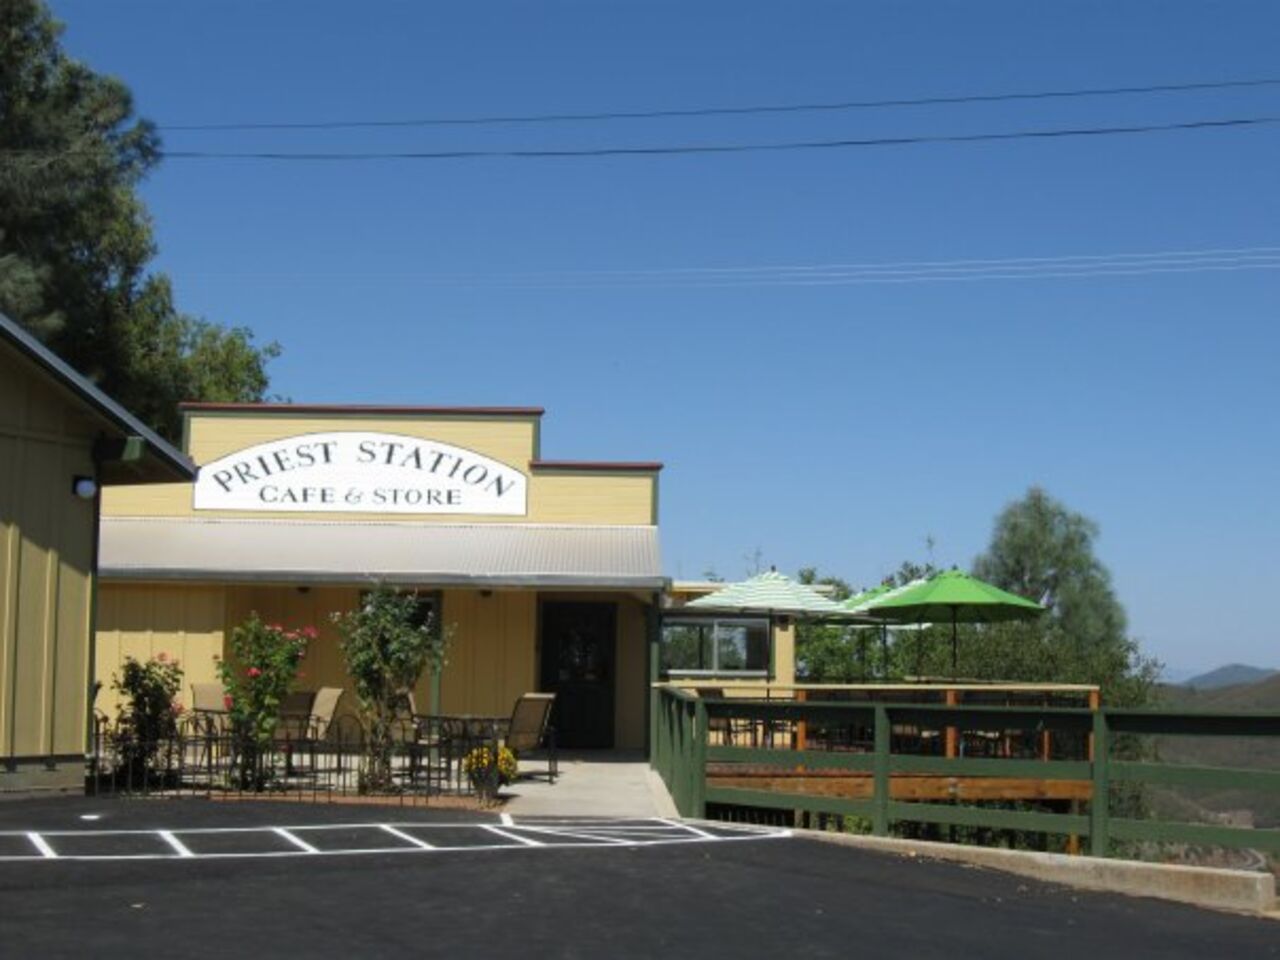 A photo of Priest Station Café